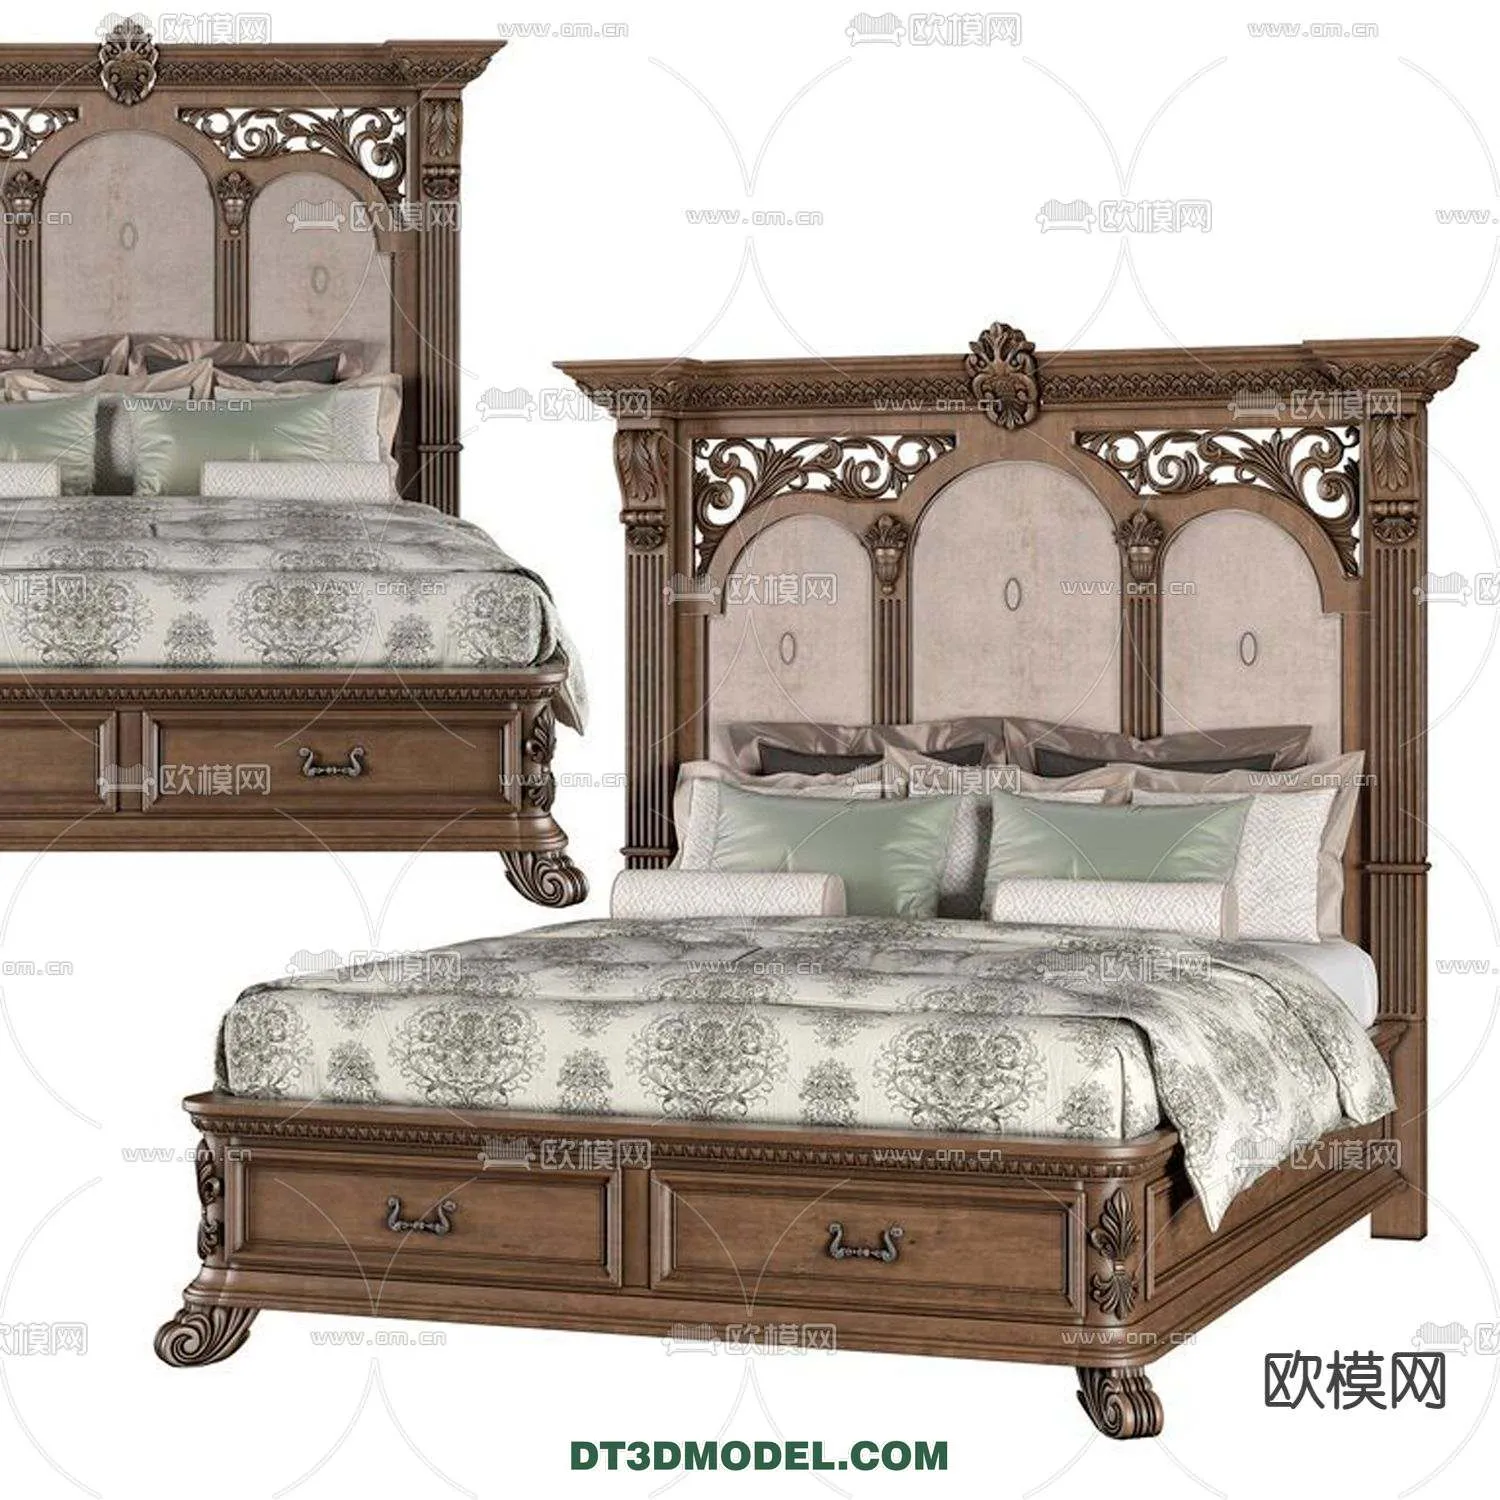 Double Bed 3D Models – 0015